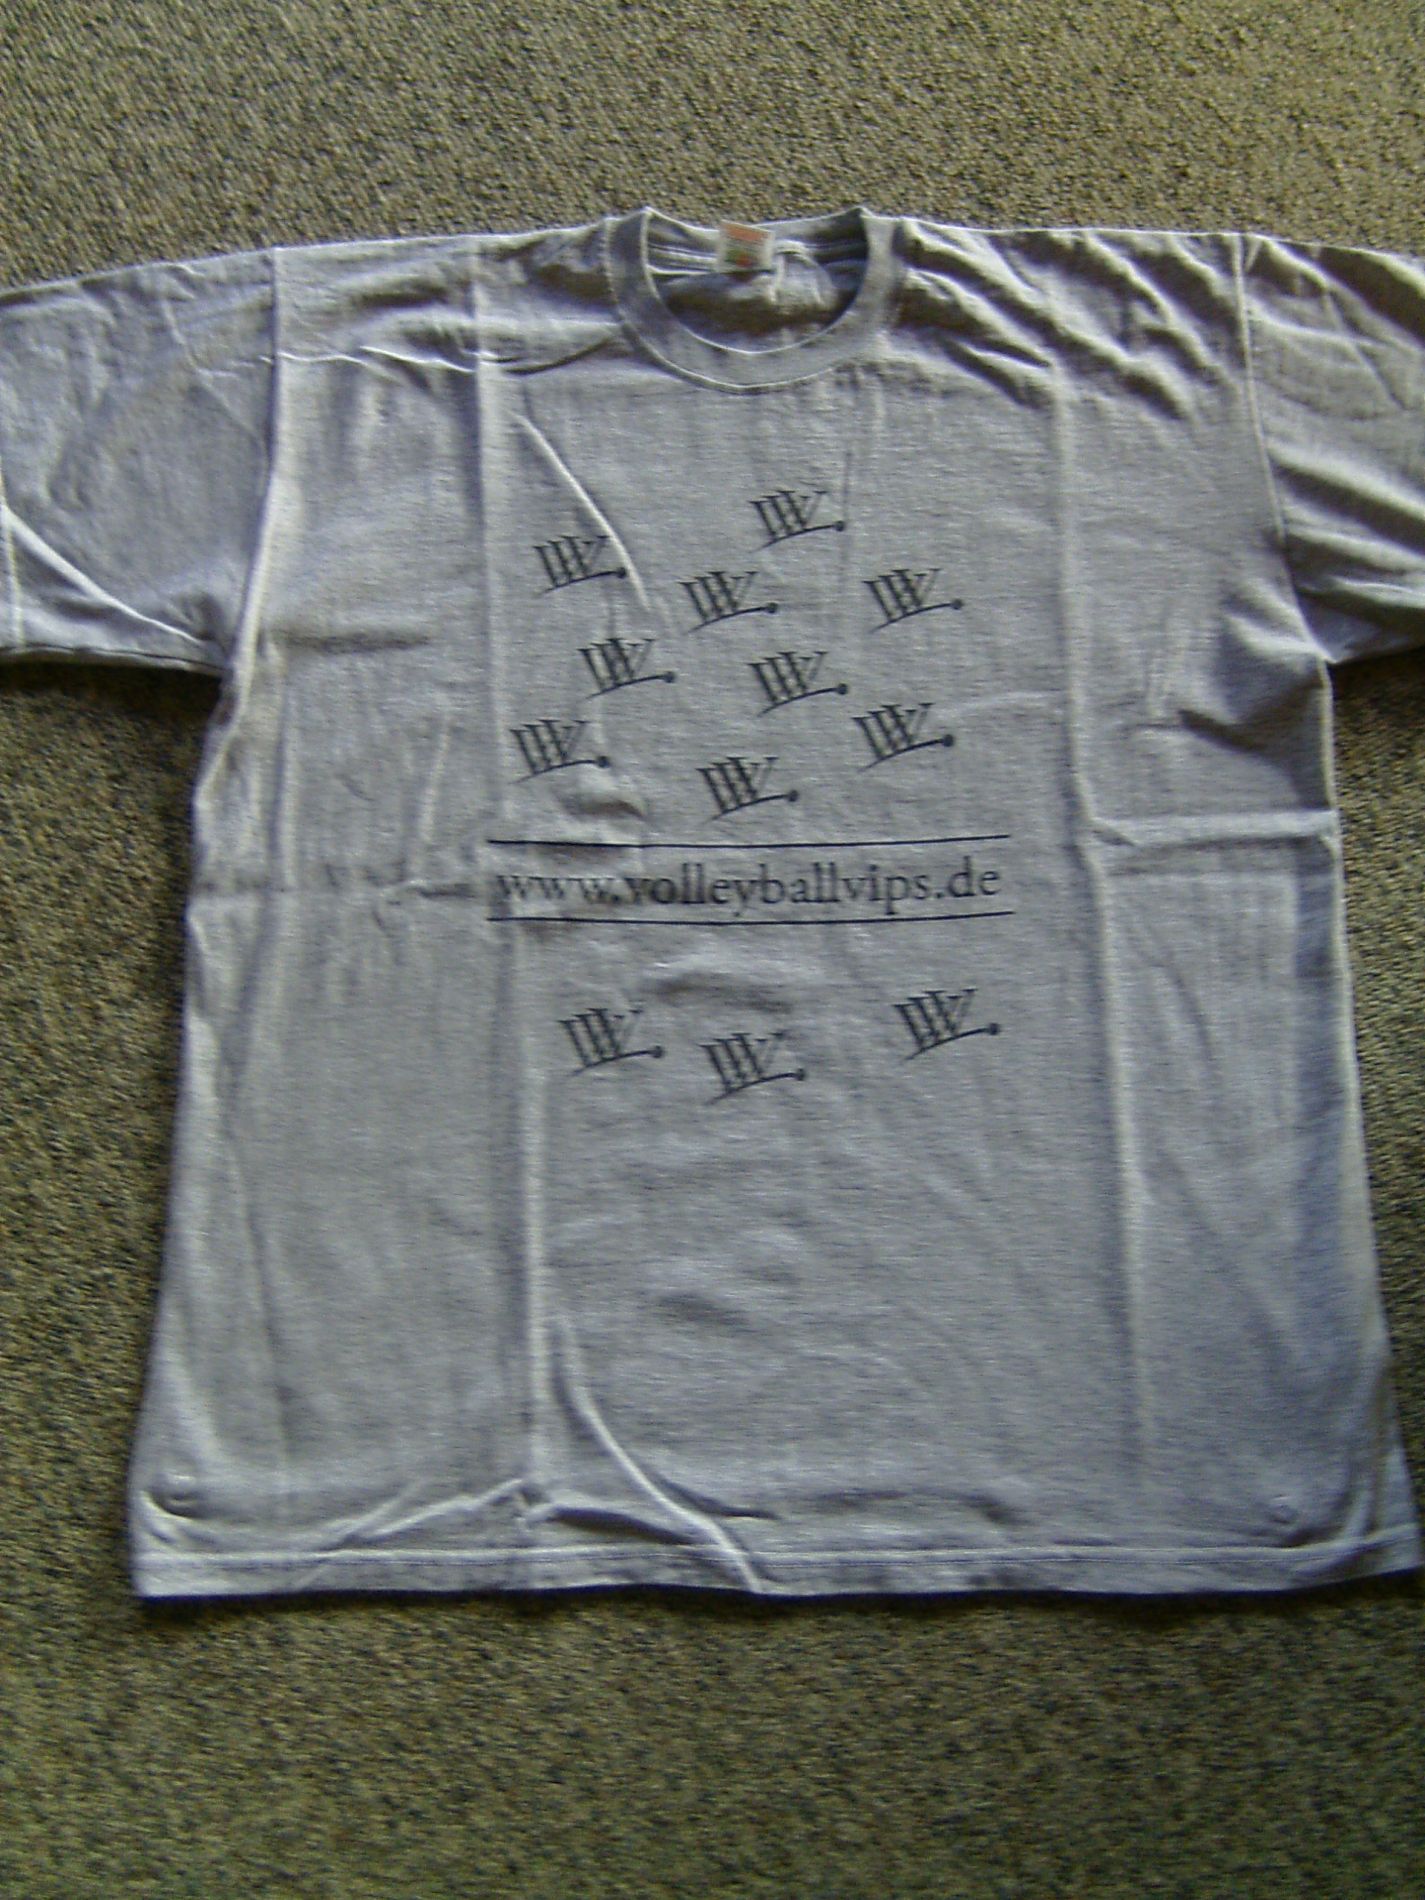 T Shirt VVV 2012